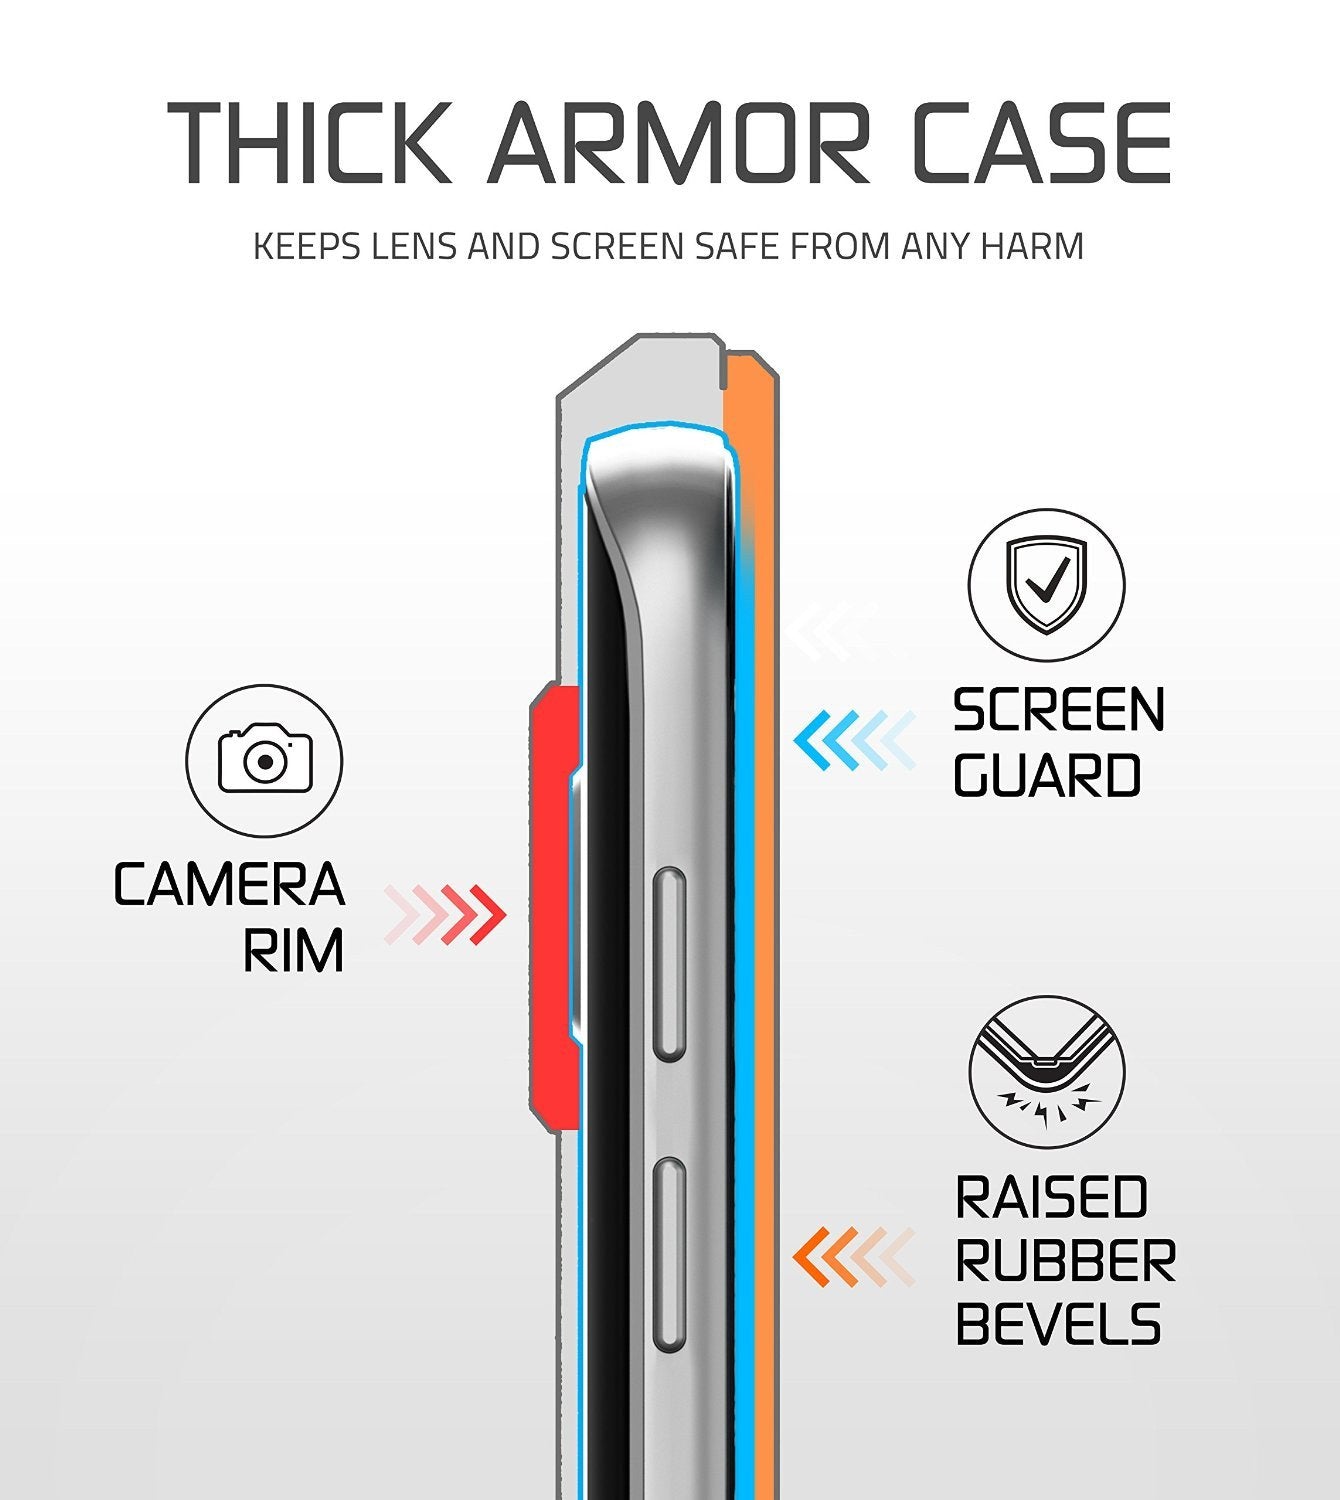 Galaxy S7 Waterproof Case, Ghostek® Atomic 2.0 Black Water/Shock/Dirt/Snow Proof | Lifetime Warranty